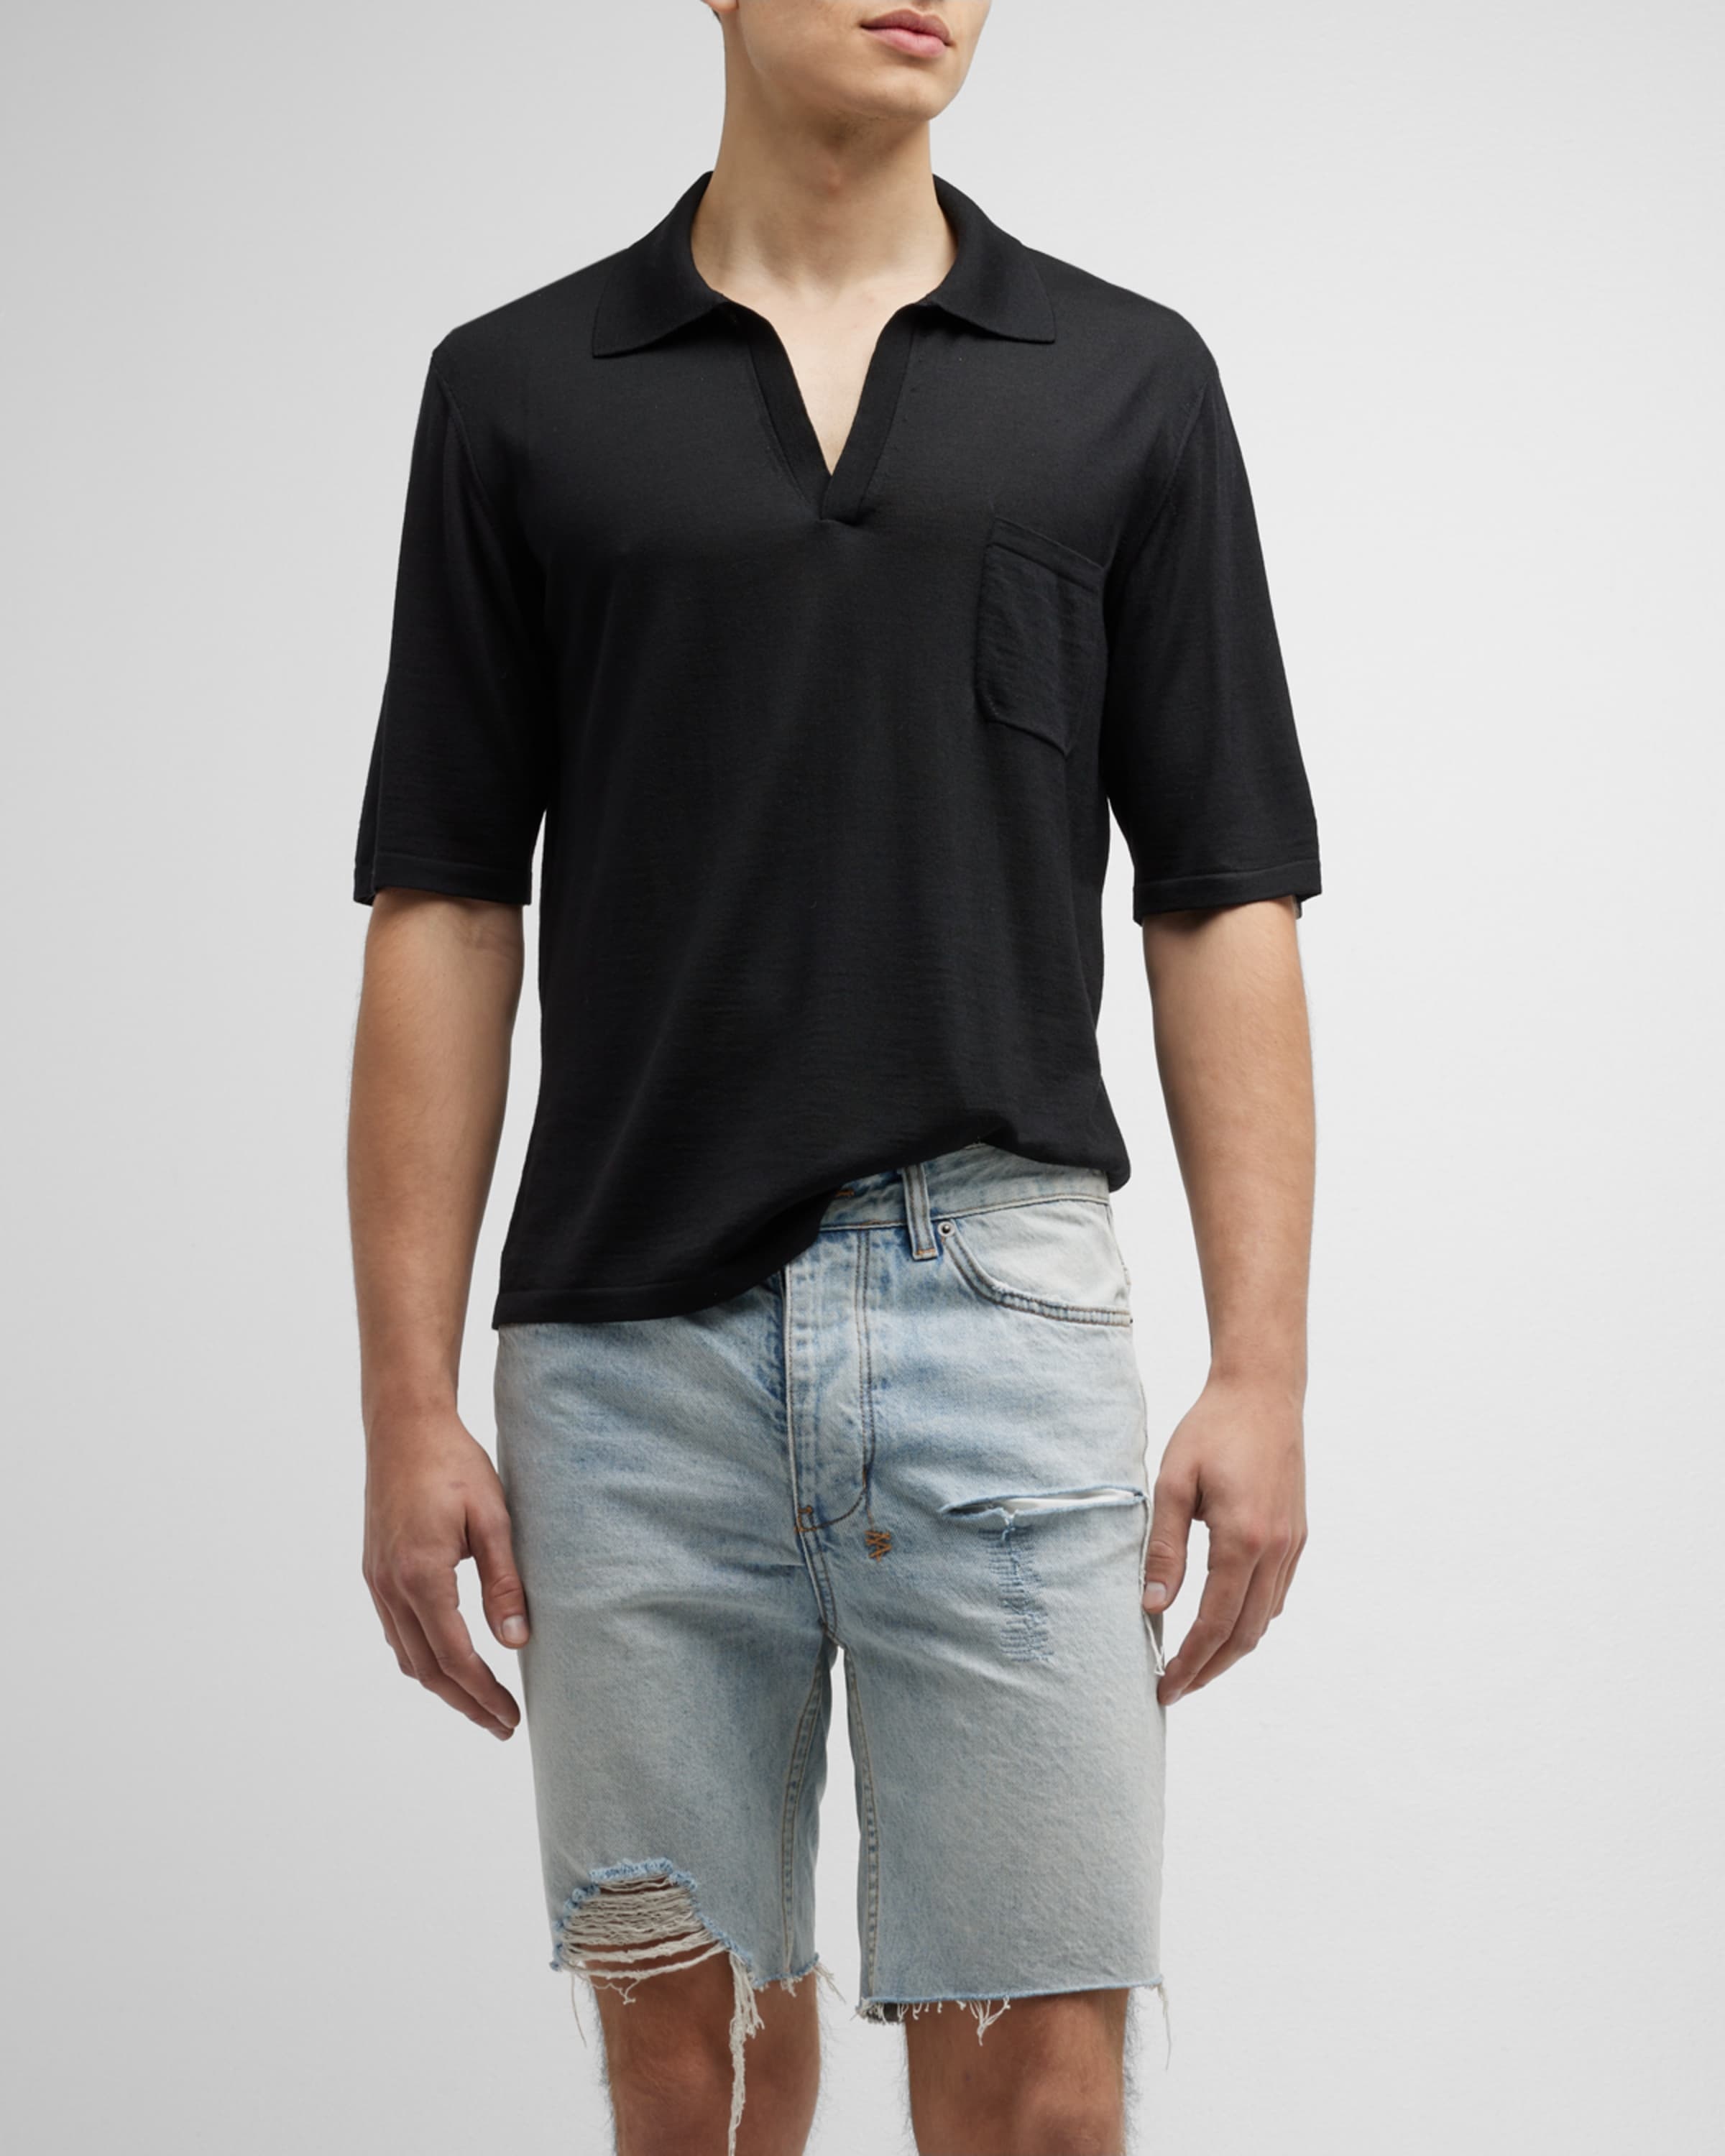 Men's Knit Polo Shirt with Open Collar - 2